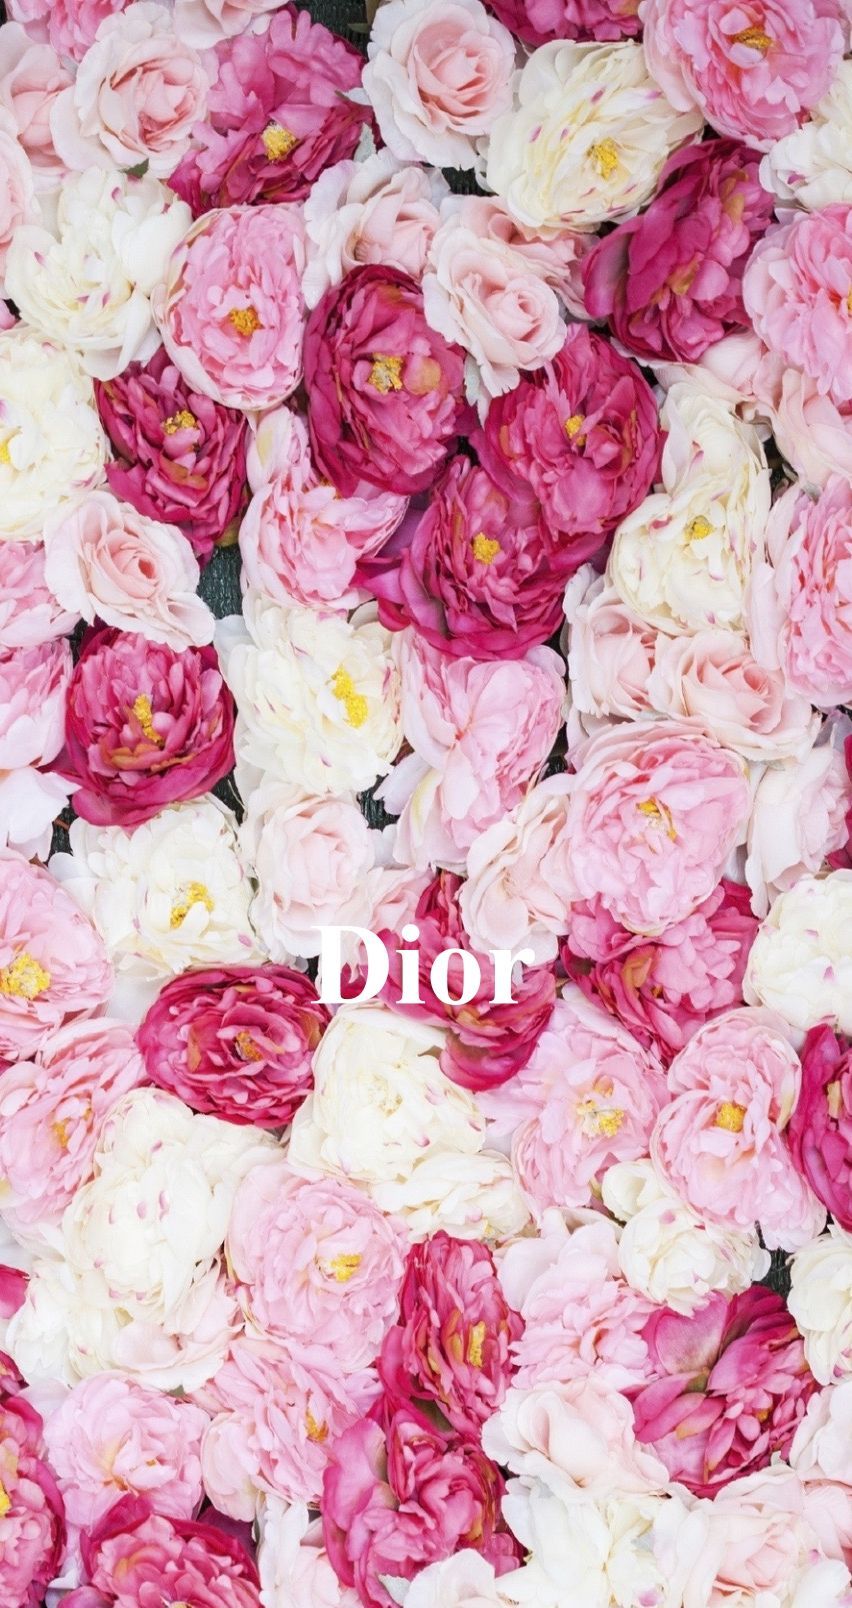 Dior Floral IPhone 6 6s Wallpaper Parallax Wallpaper. Designer Iphone Wallpaper, Aesthetic Iphone Wallpaper, Fashion Wallpaper